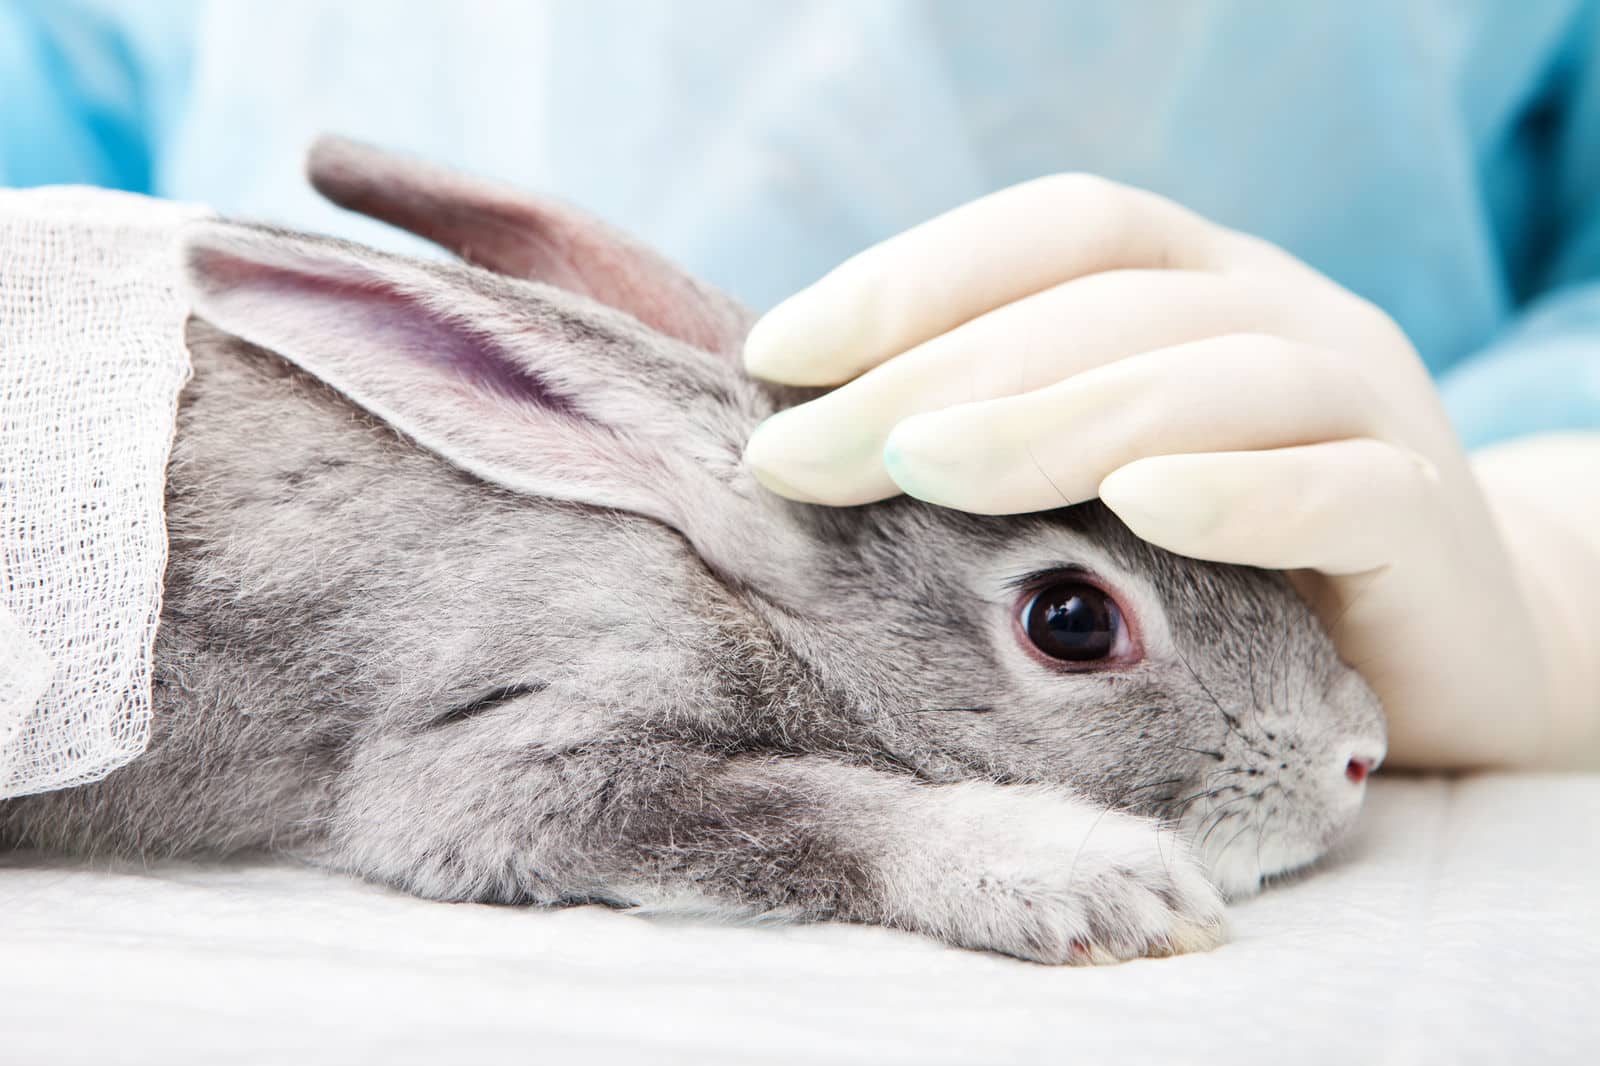 Animals in Cosmetics Testing